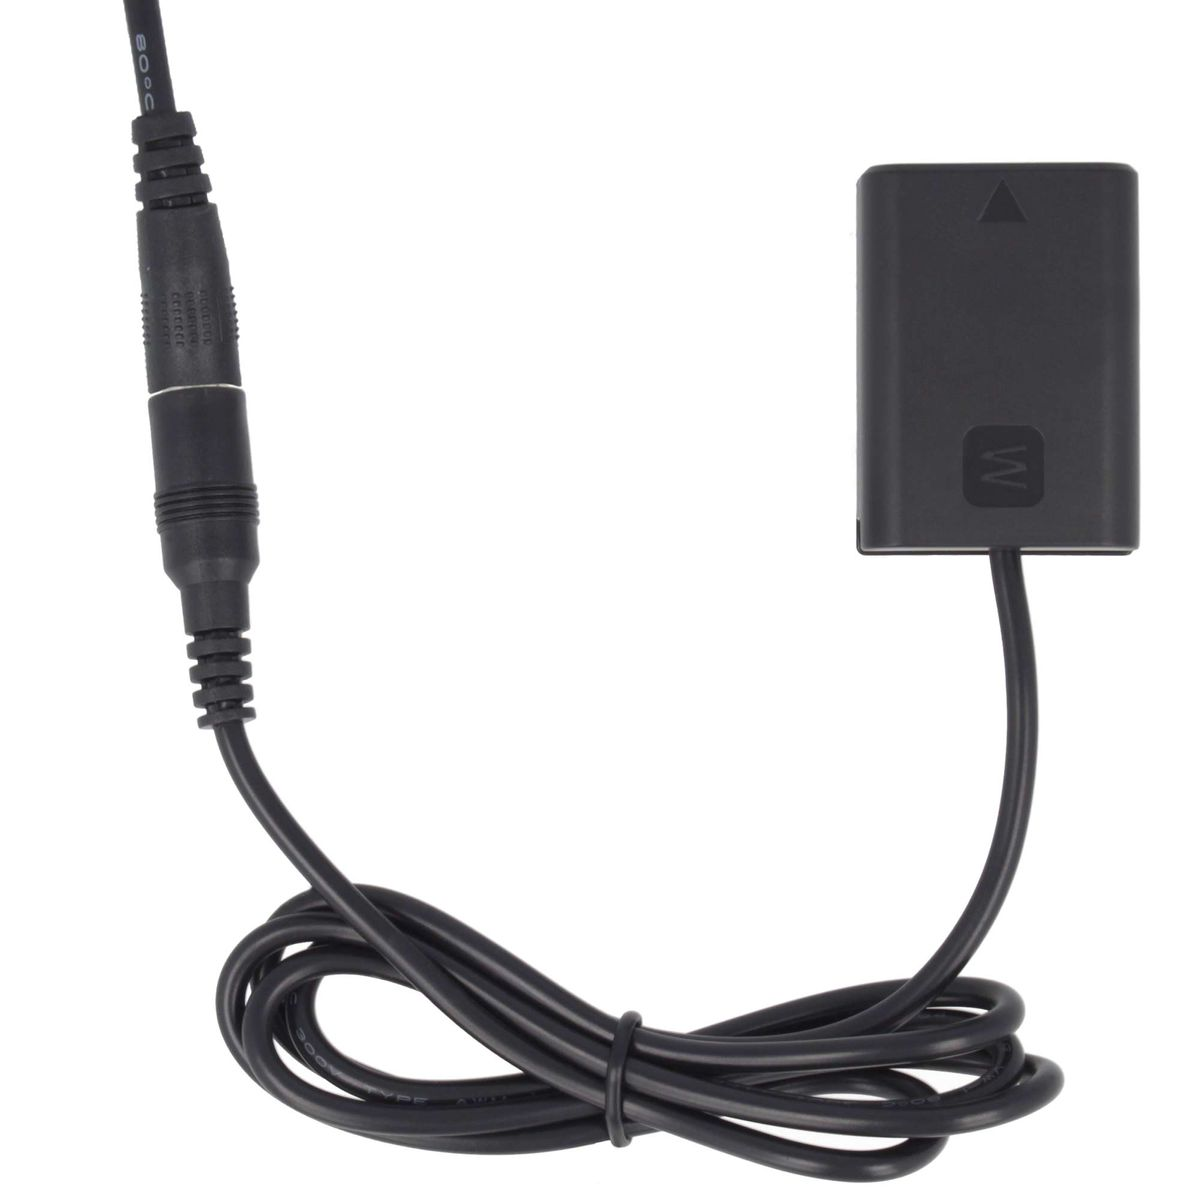 AKKU-KING USB-C Adapter + Kuppler mit Ladegerät Angabe Sony, keine Sony AC-PW20 kompatibel